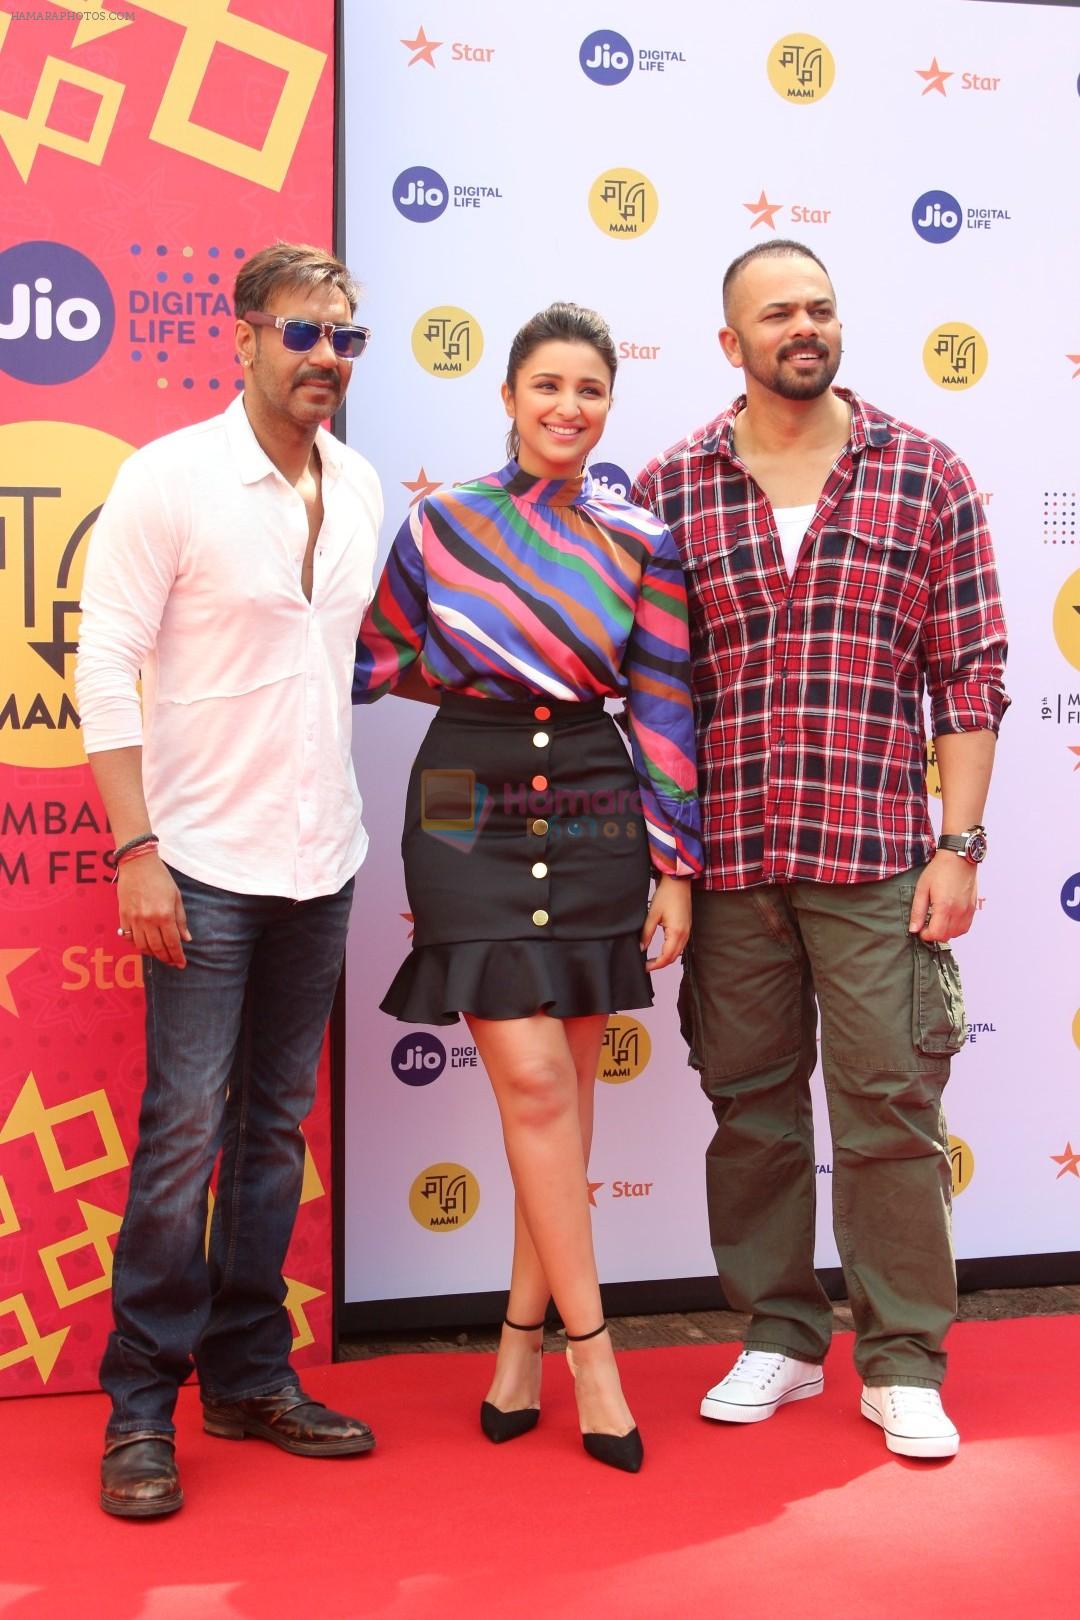 Rohit Shetty, Parineeti Chopra, Ajay Devgan at Golmaal Again Team At Jio Mami Film Mela on 7th Oct 2017